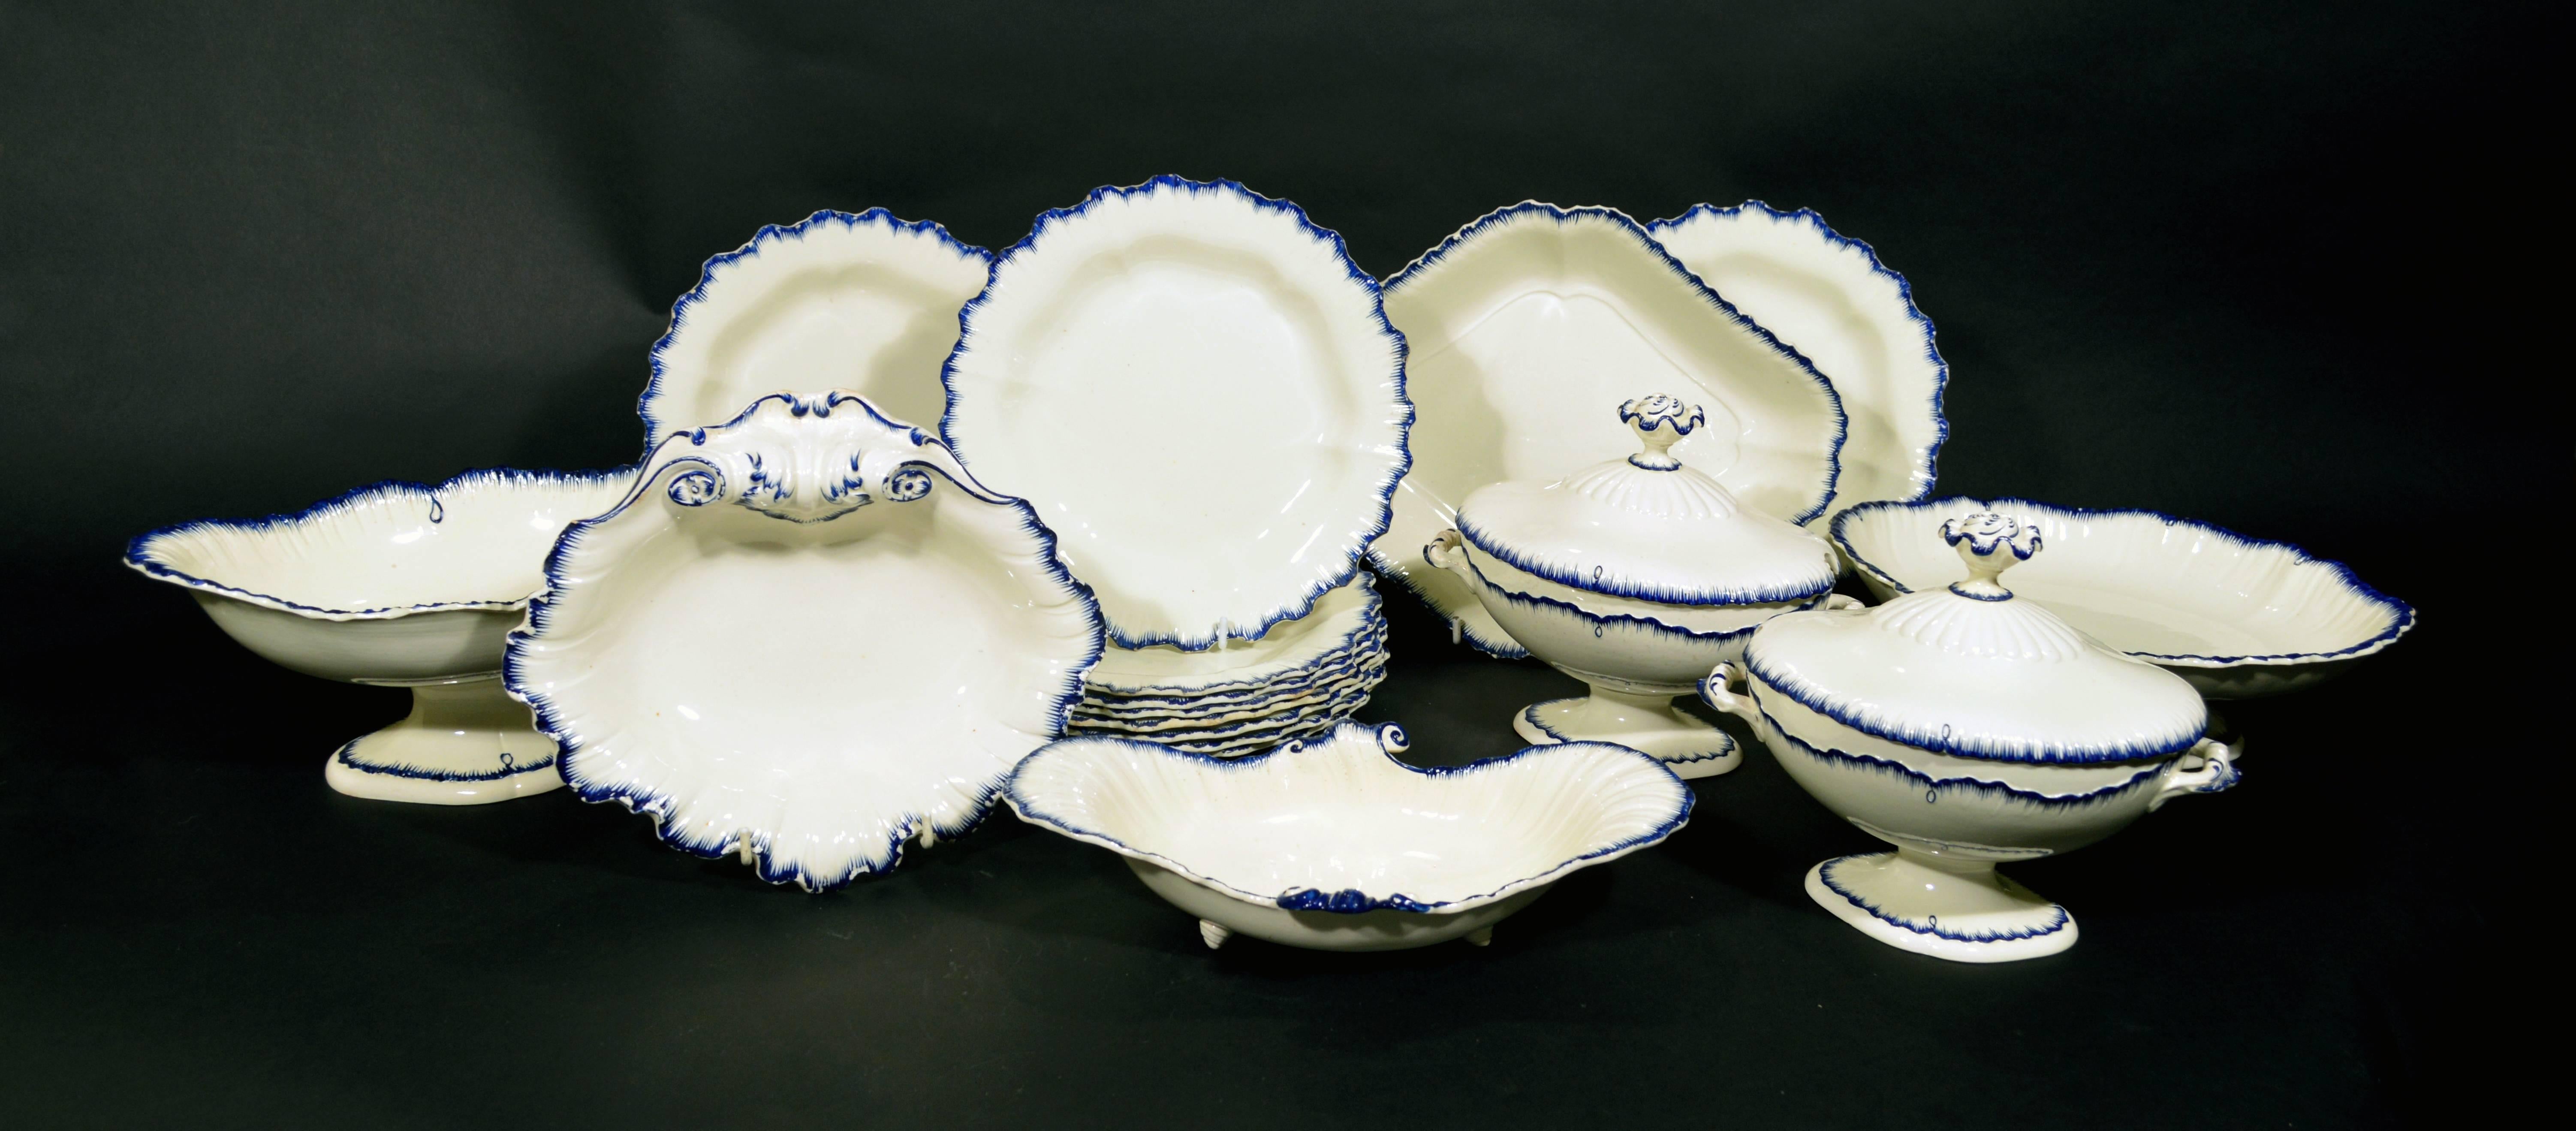 18th Century and Earlier English Pottery Creamware Blue Enamel Shell-Edge Dessert Service